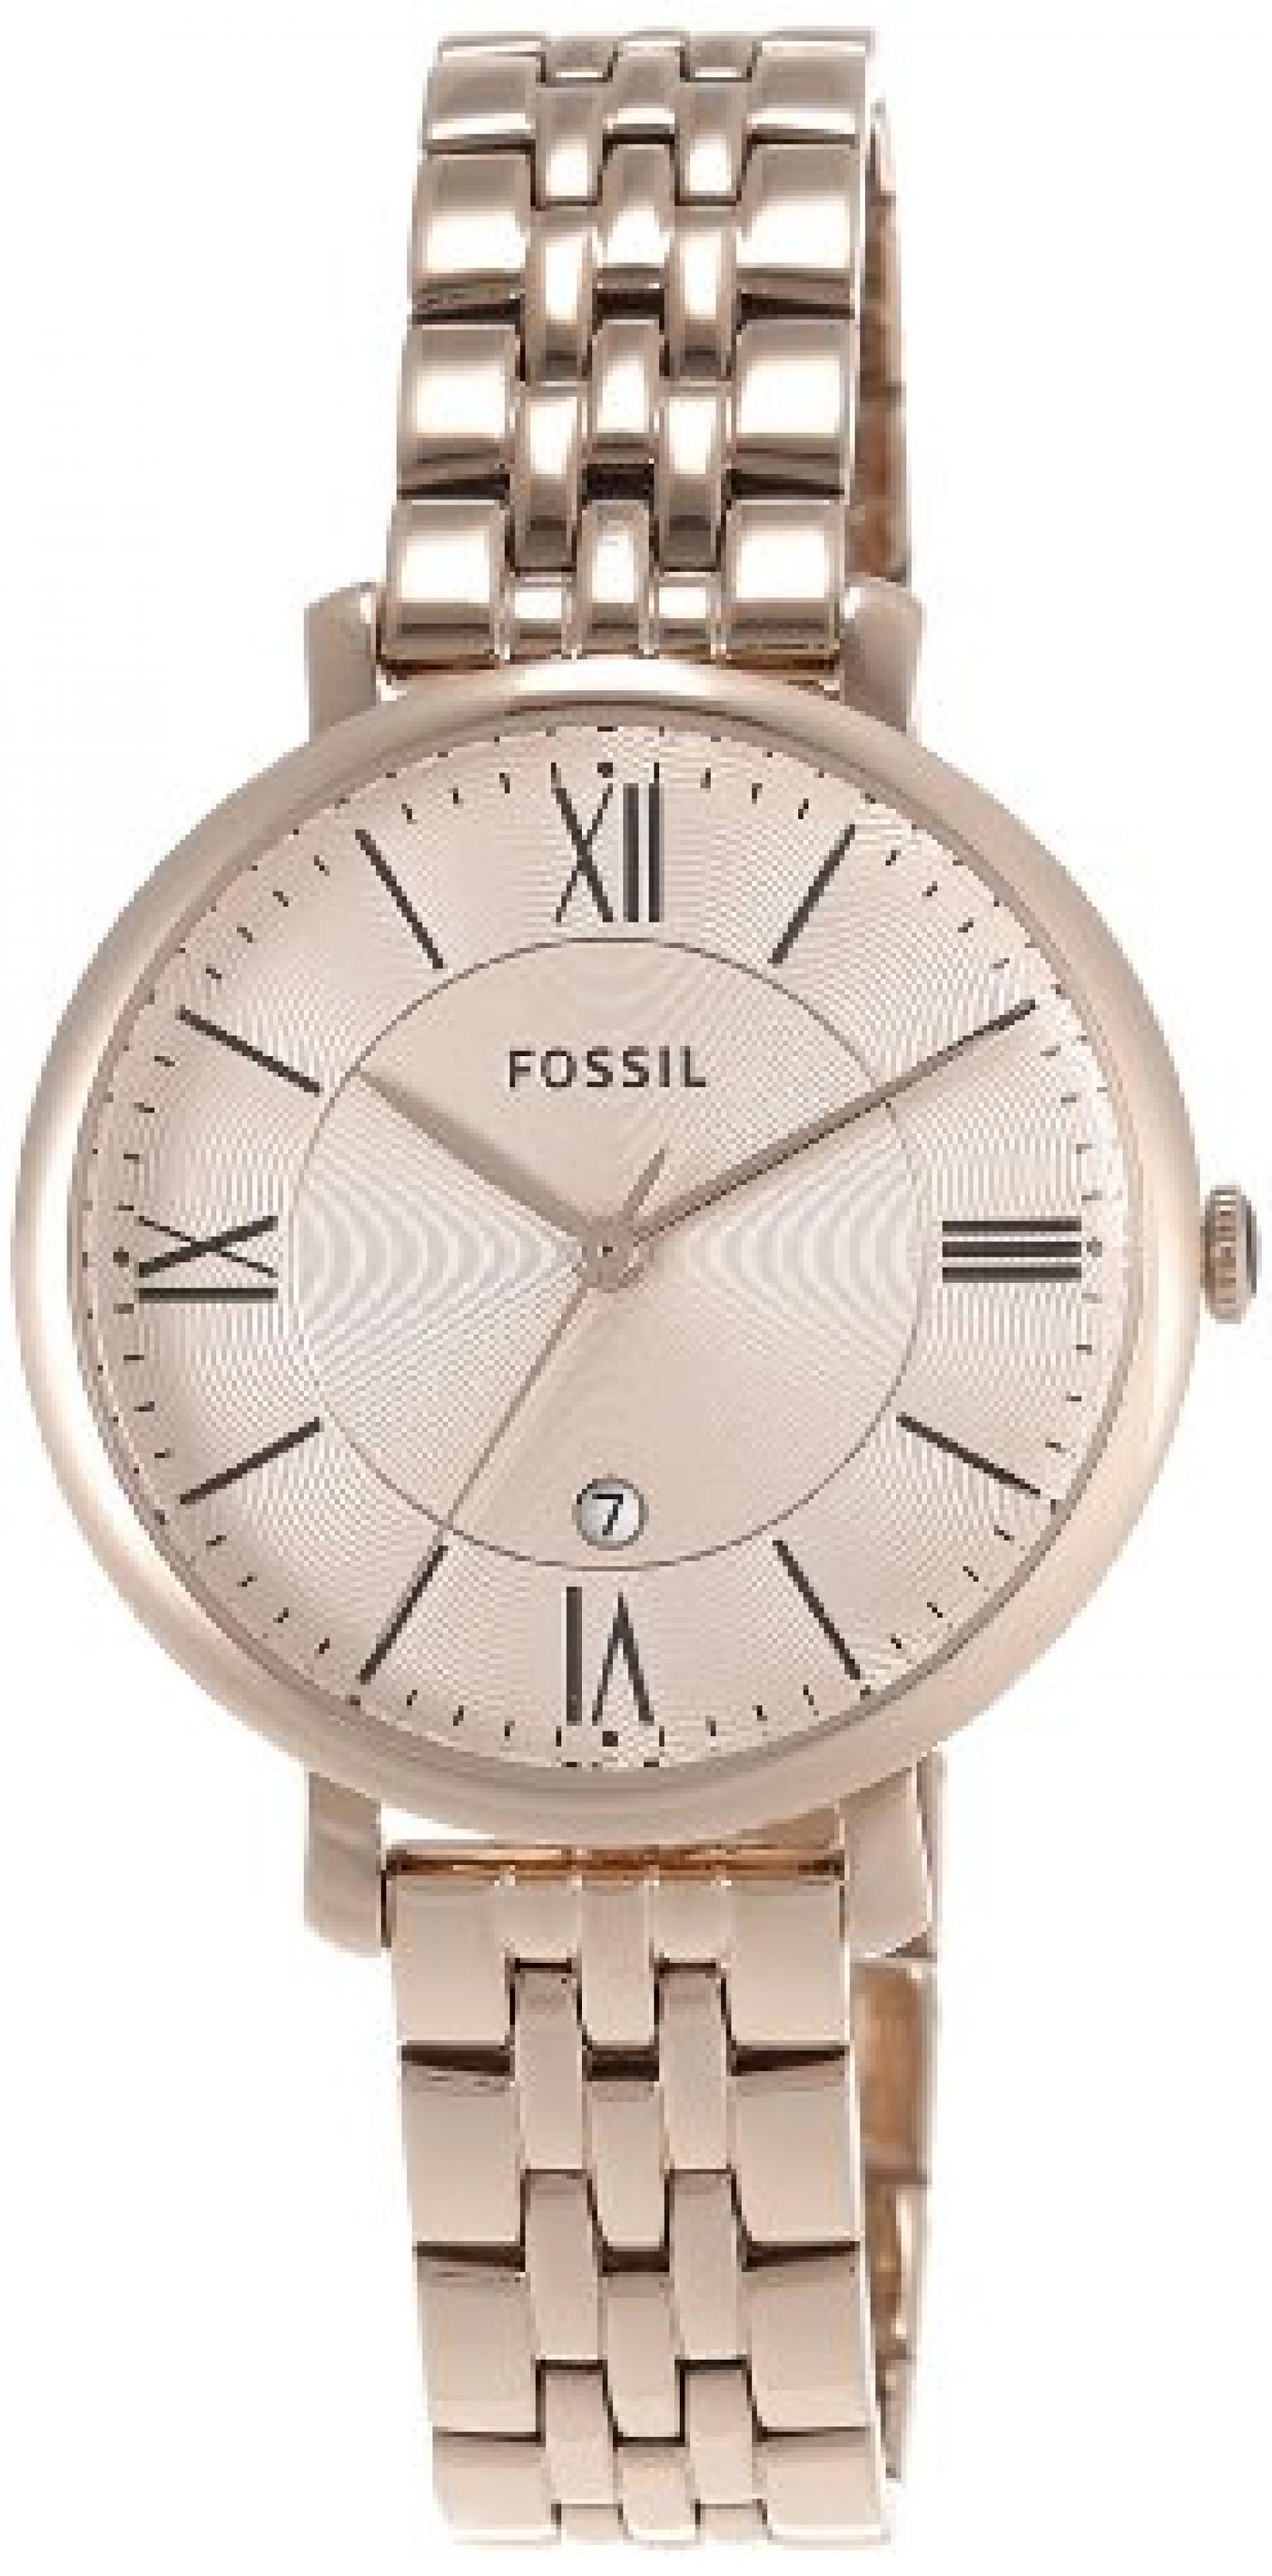 Fossil Damen-Armbanduhr Analog Quarz Edelstahl beschichtet ES3435 